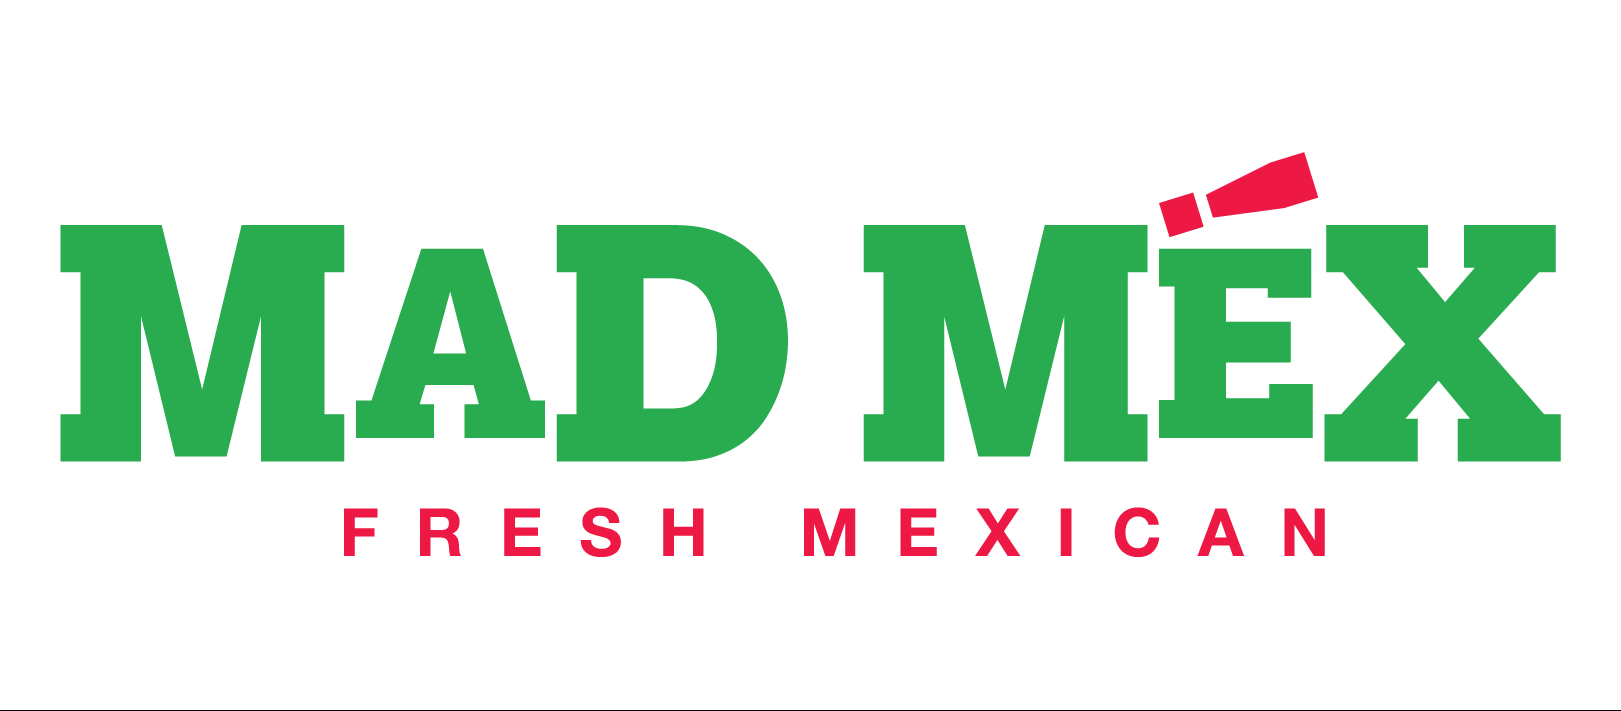 Mad Max Logo